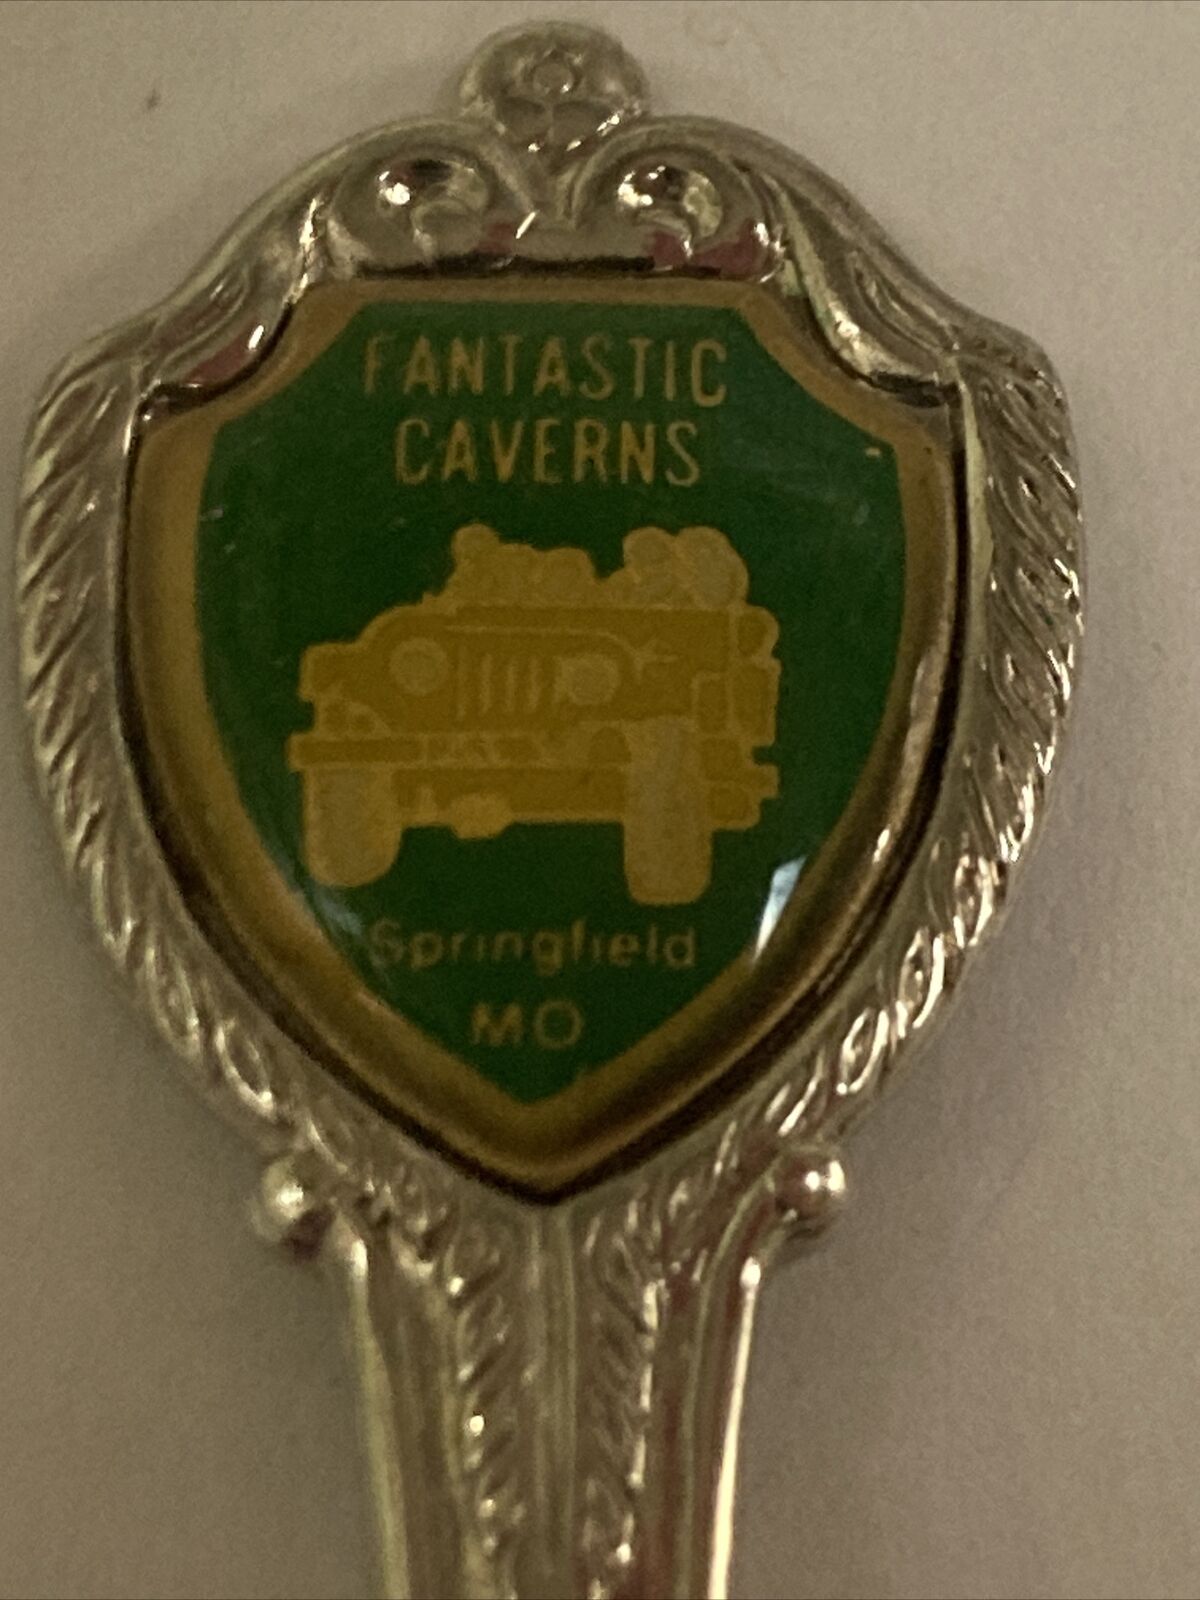 Fantastic Caverns Springfield Missouri Vintage Souvenir Spoon Collectible